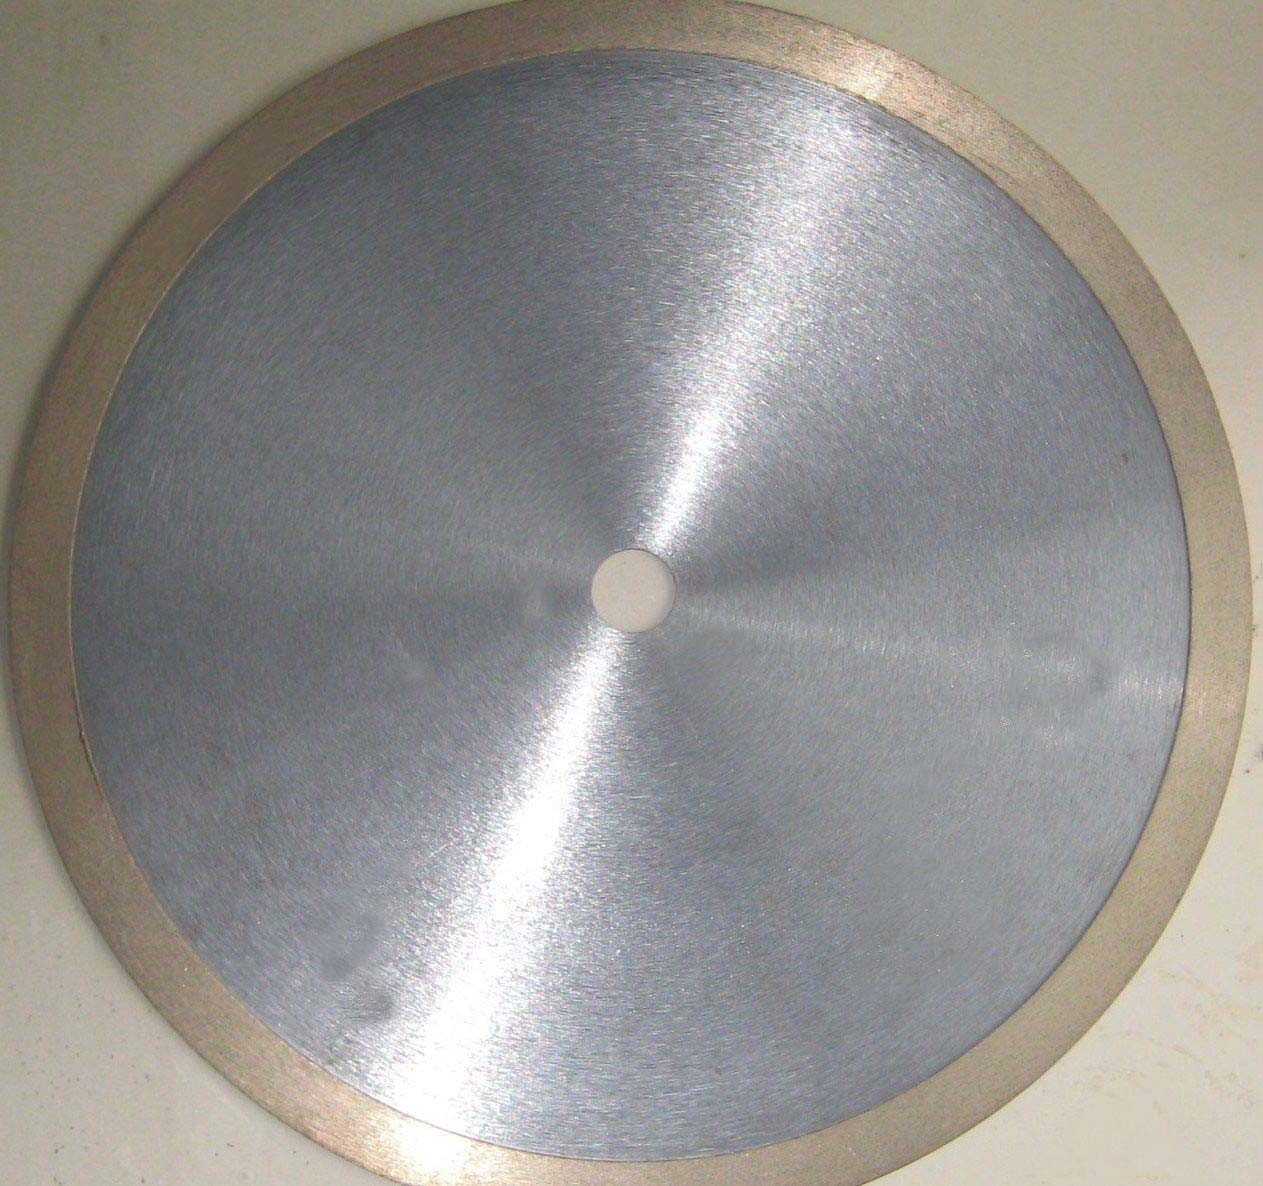 Circular Diamond Saw Blade for Glass / Glass Diamond Cutting Wheel